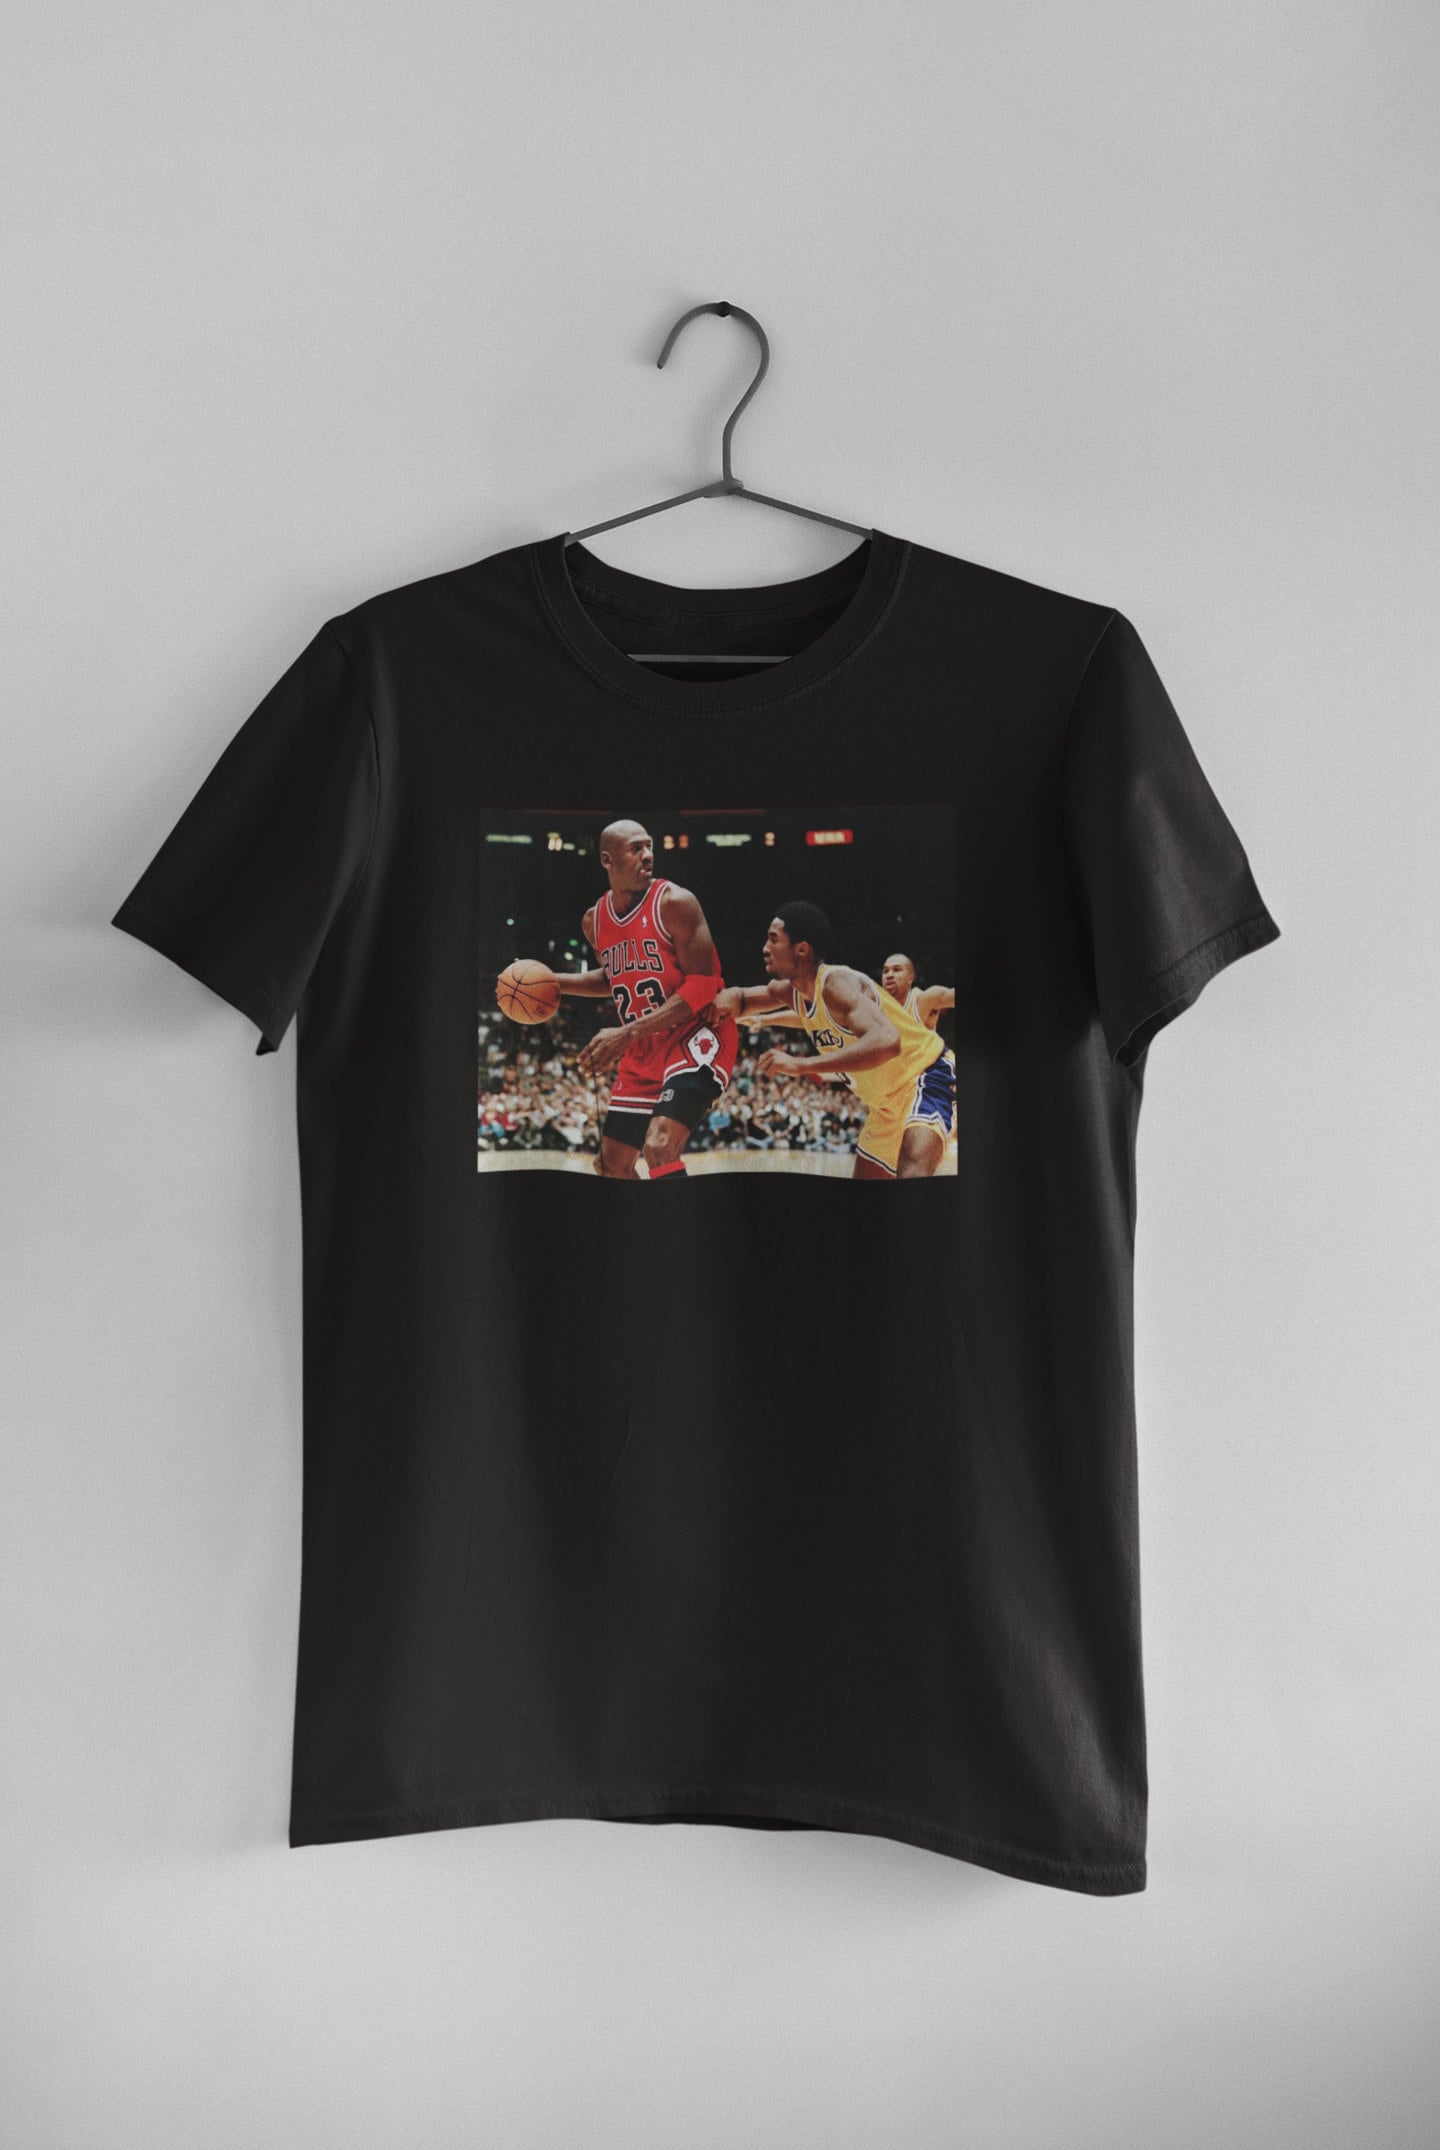 Kobe x Michael Jordan t shirt, iconic picture, GOAT Shirt